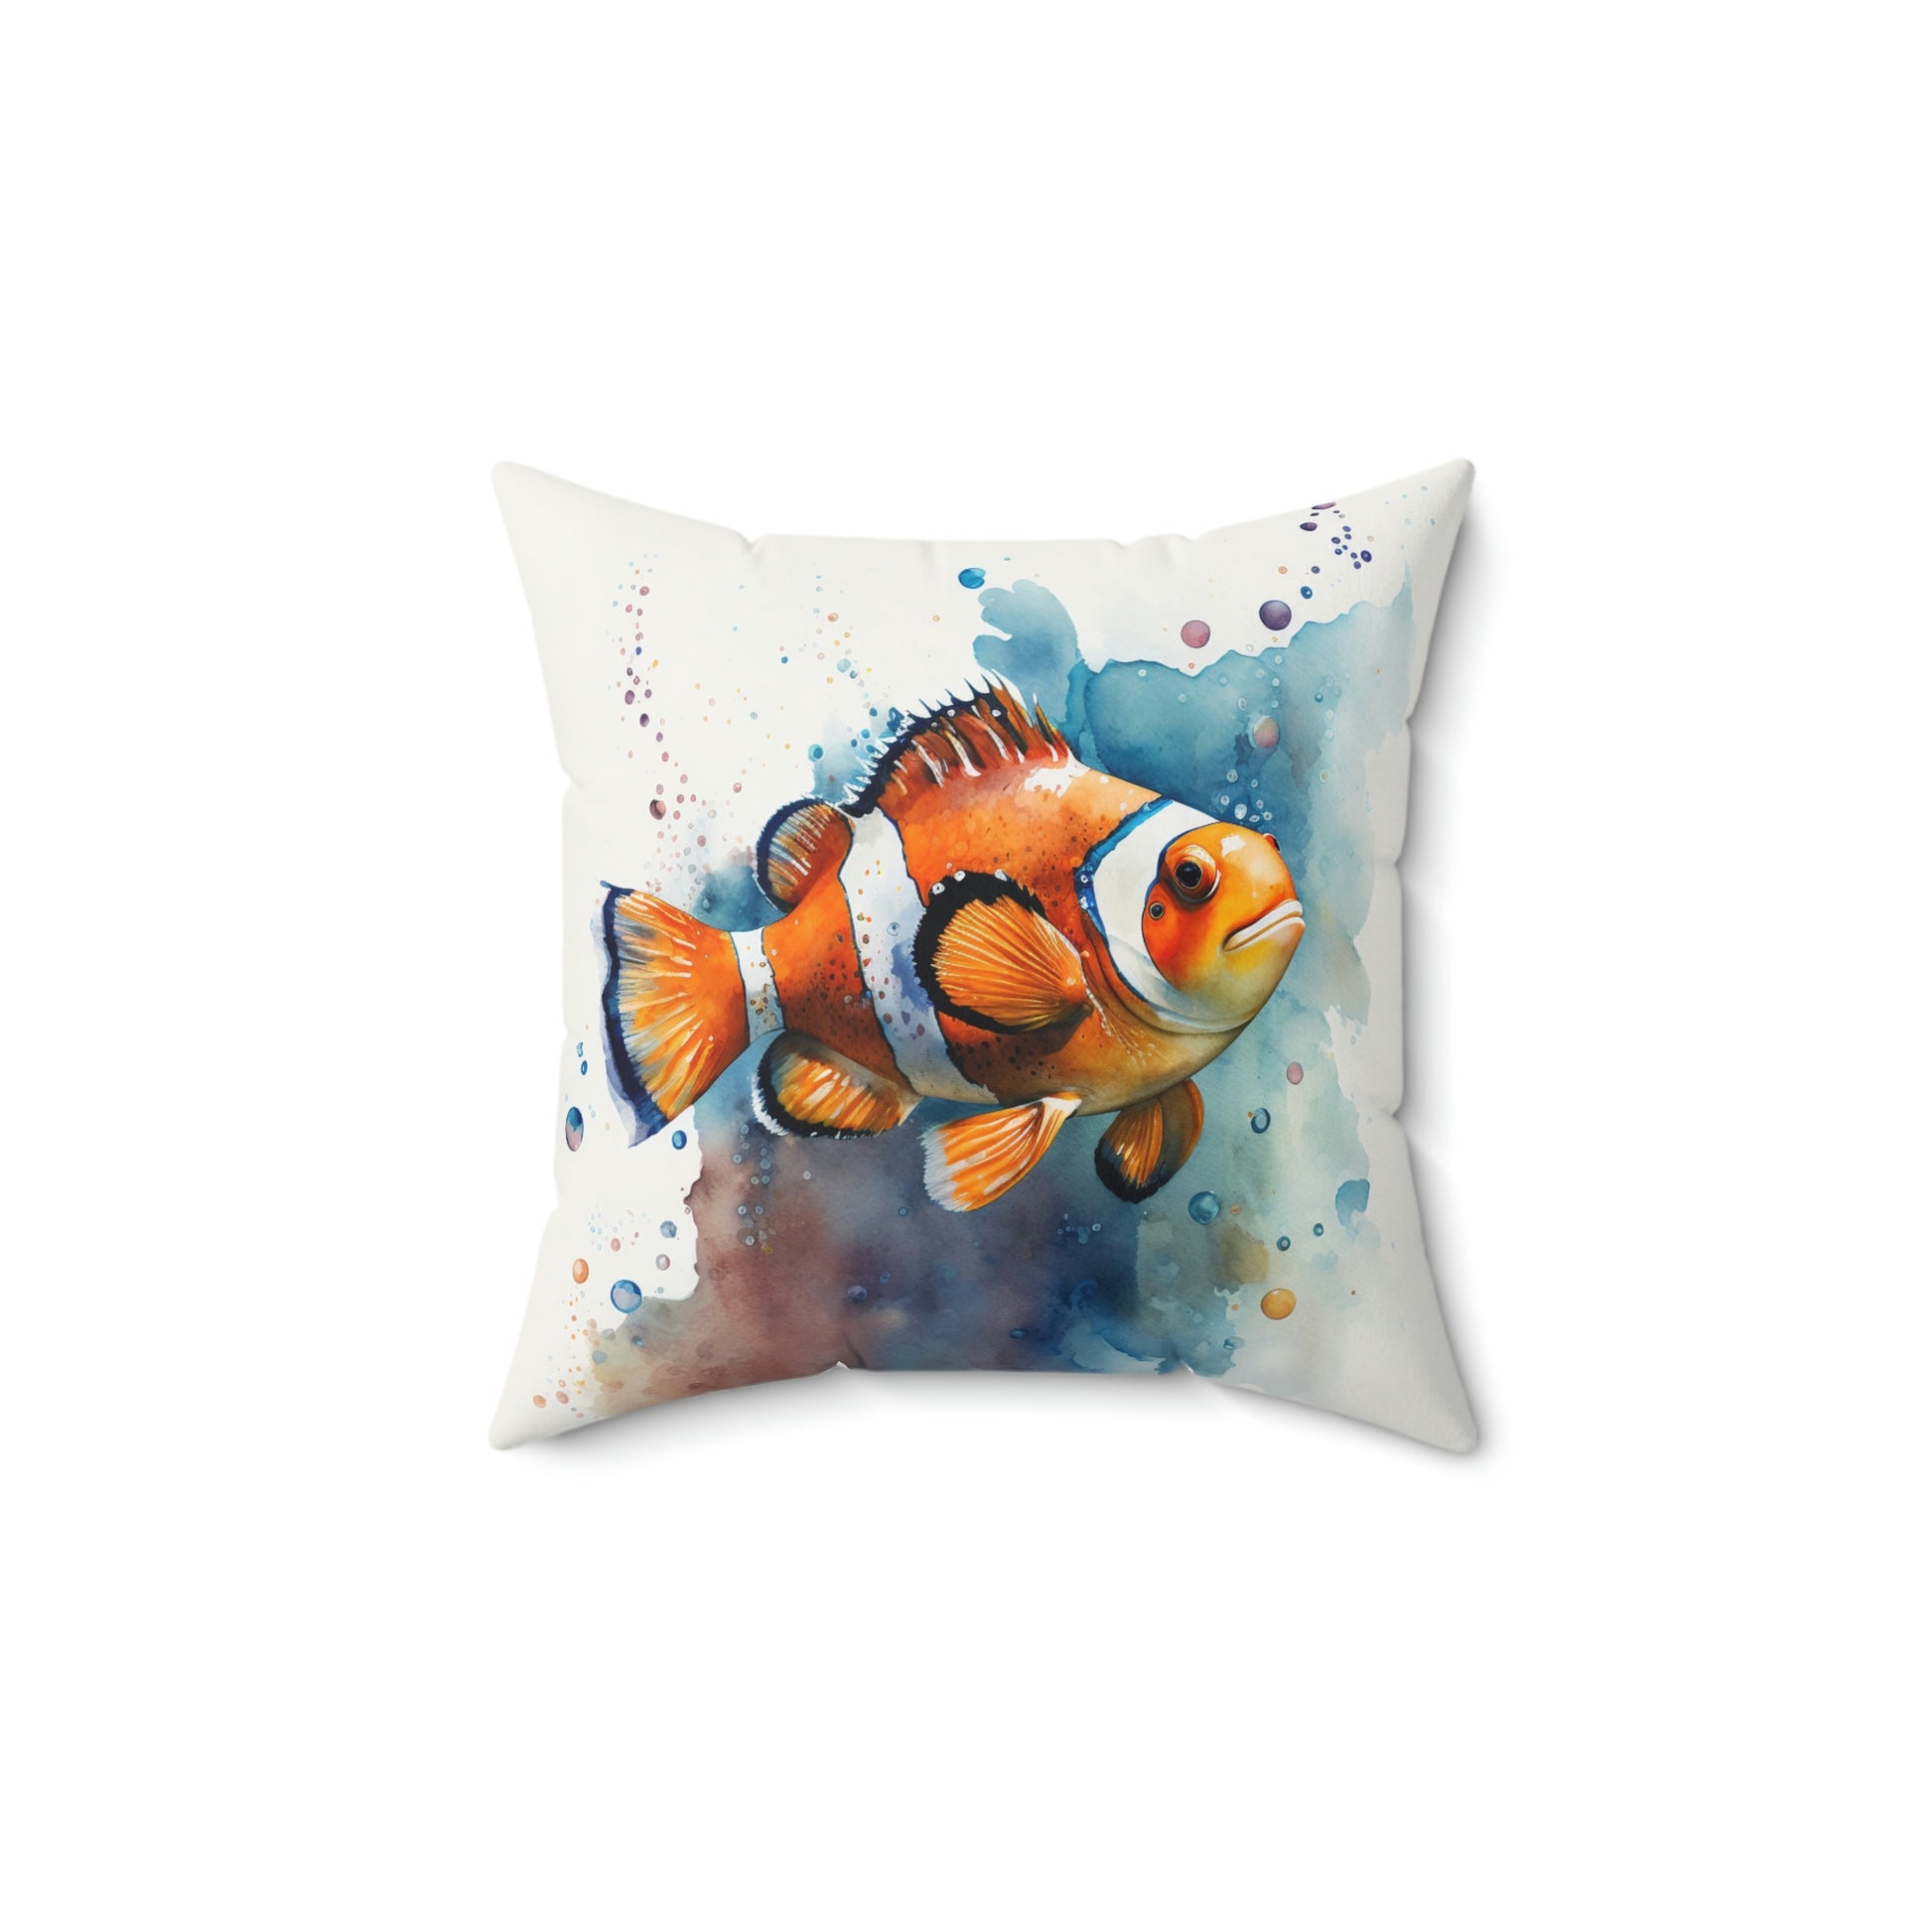 Clownfish Watercolor Pillow - Reef of Clowns